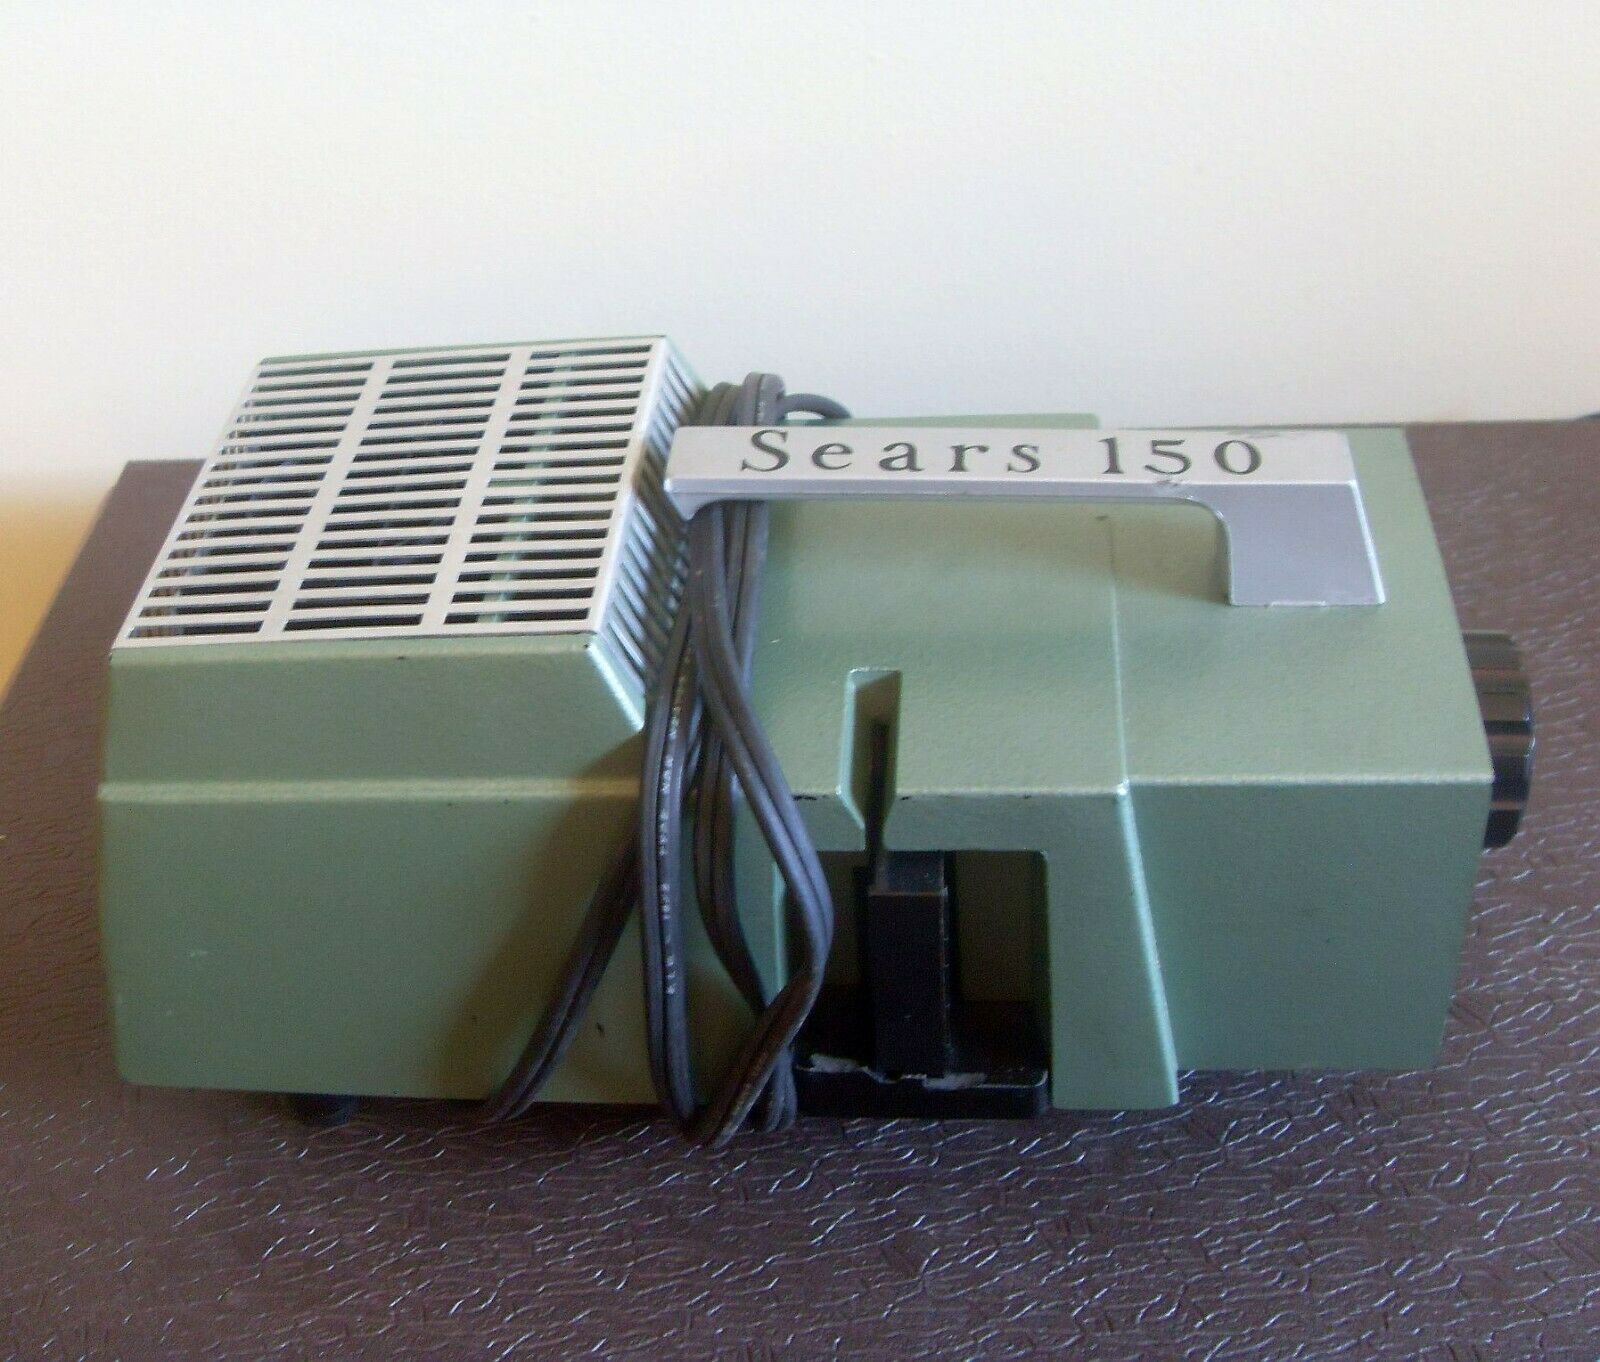 Vintage Sears 150 Slide Projector By Realist Inc.  Model 3115